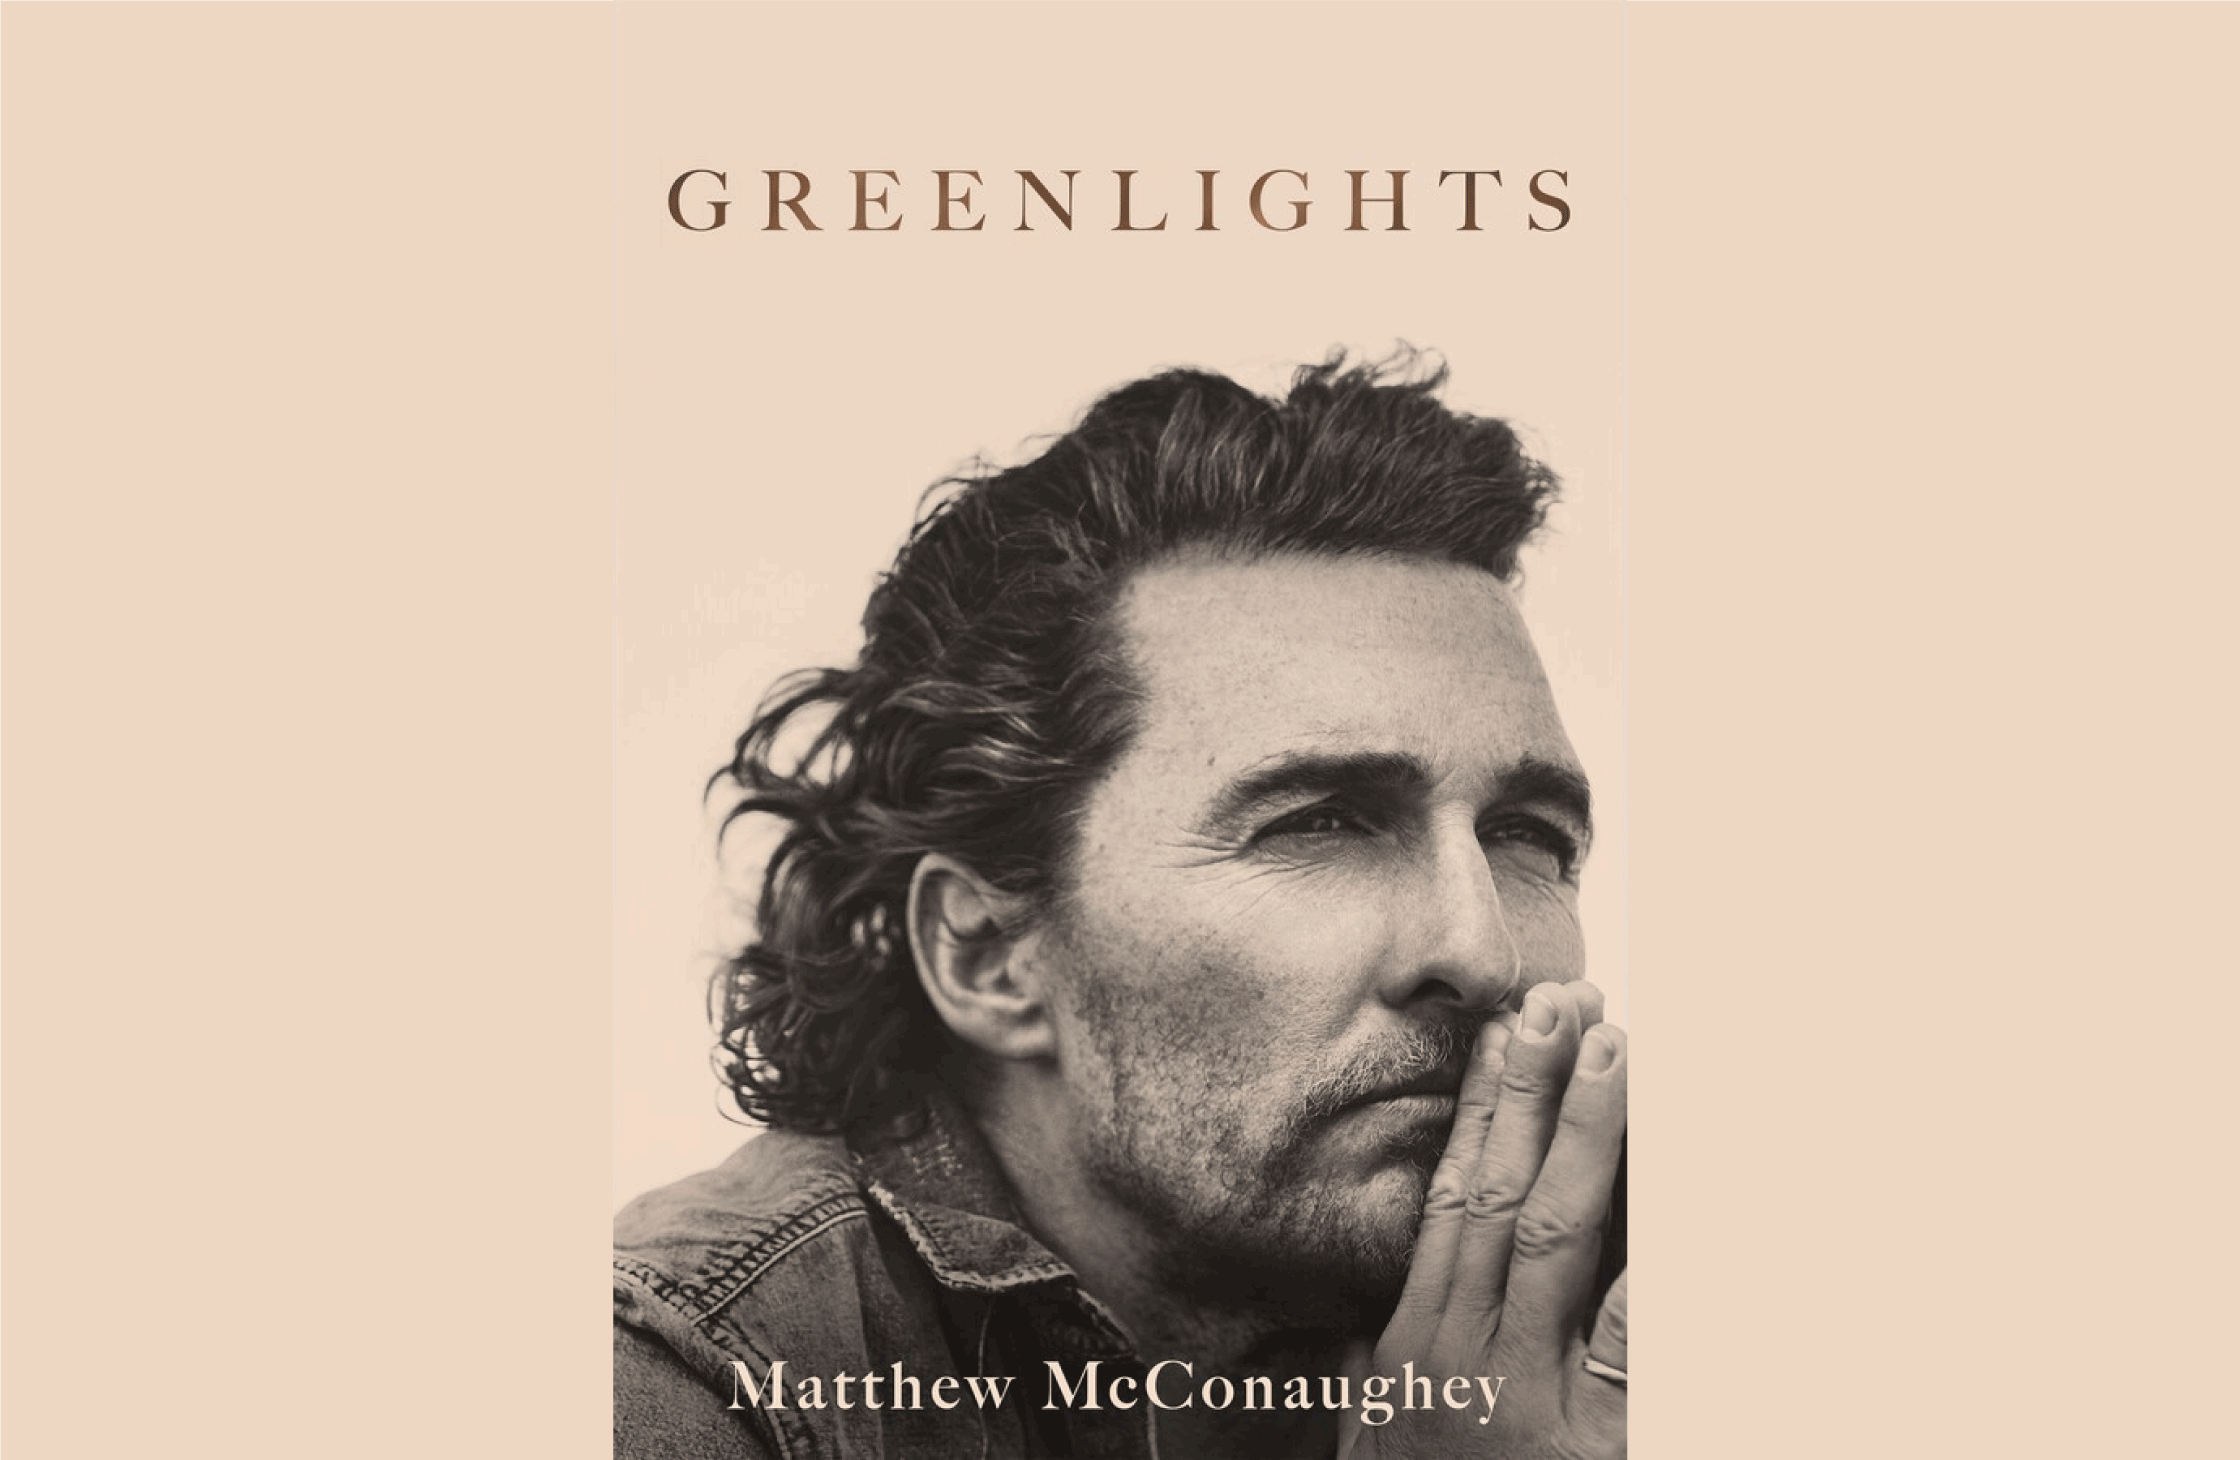 Summary: Greenlights by Matthew McConaughey